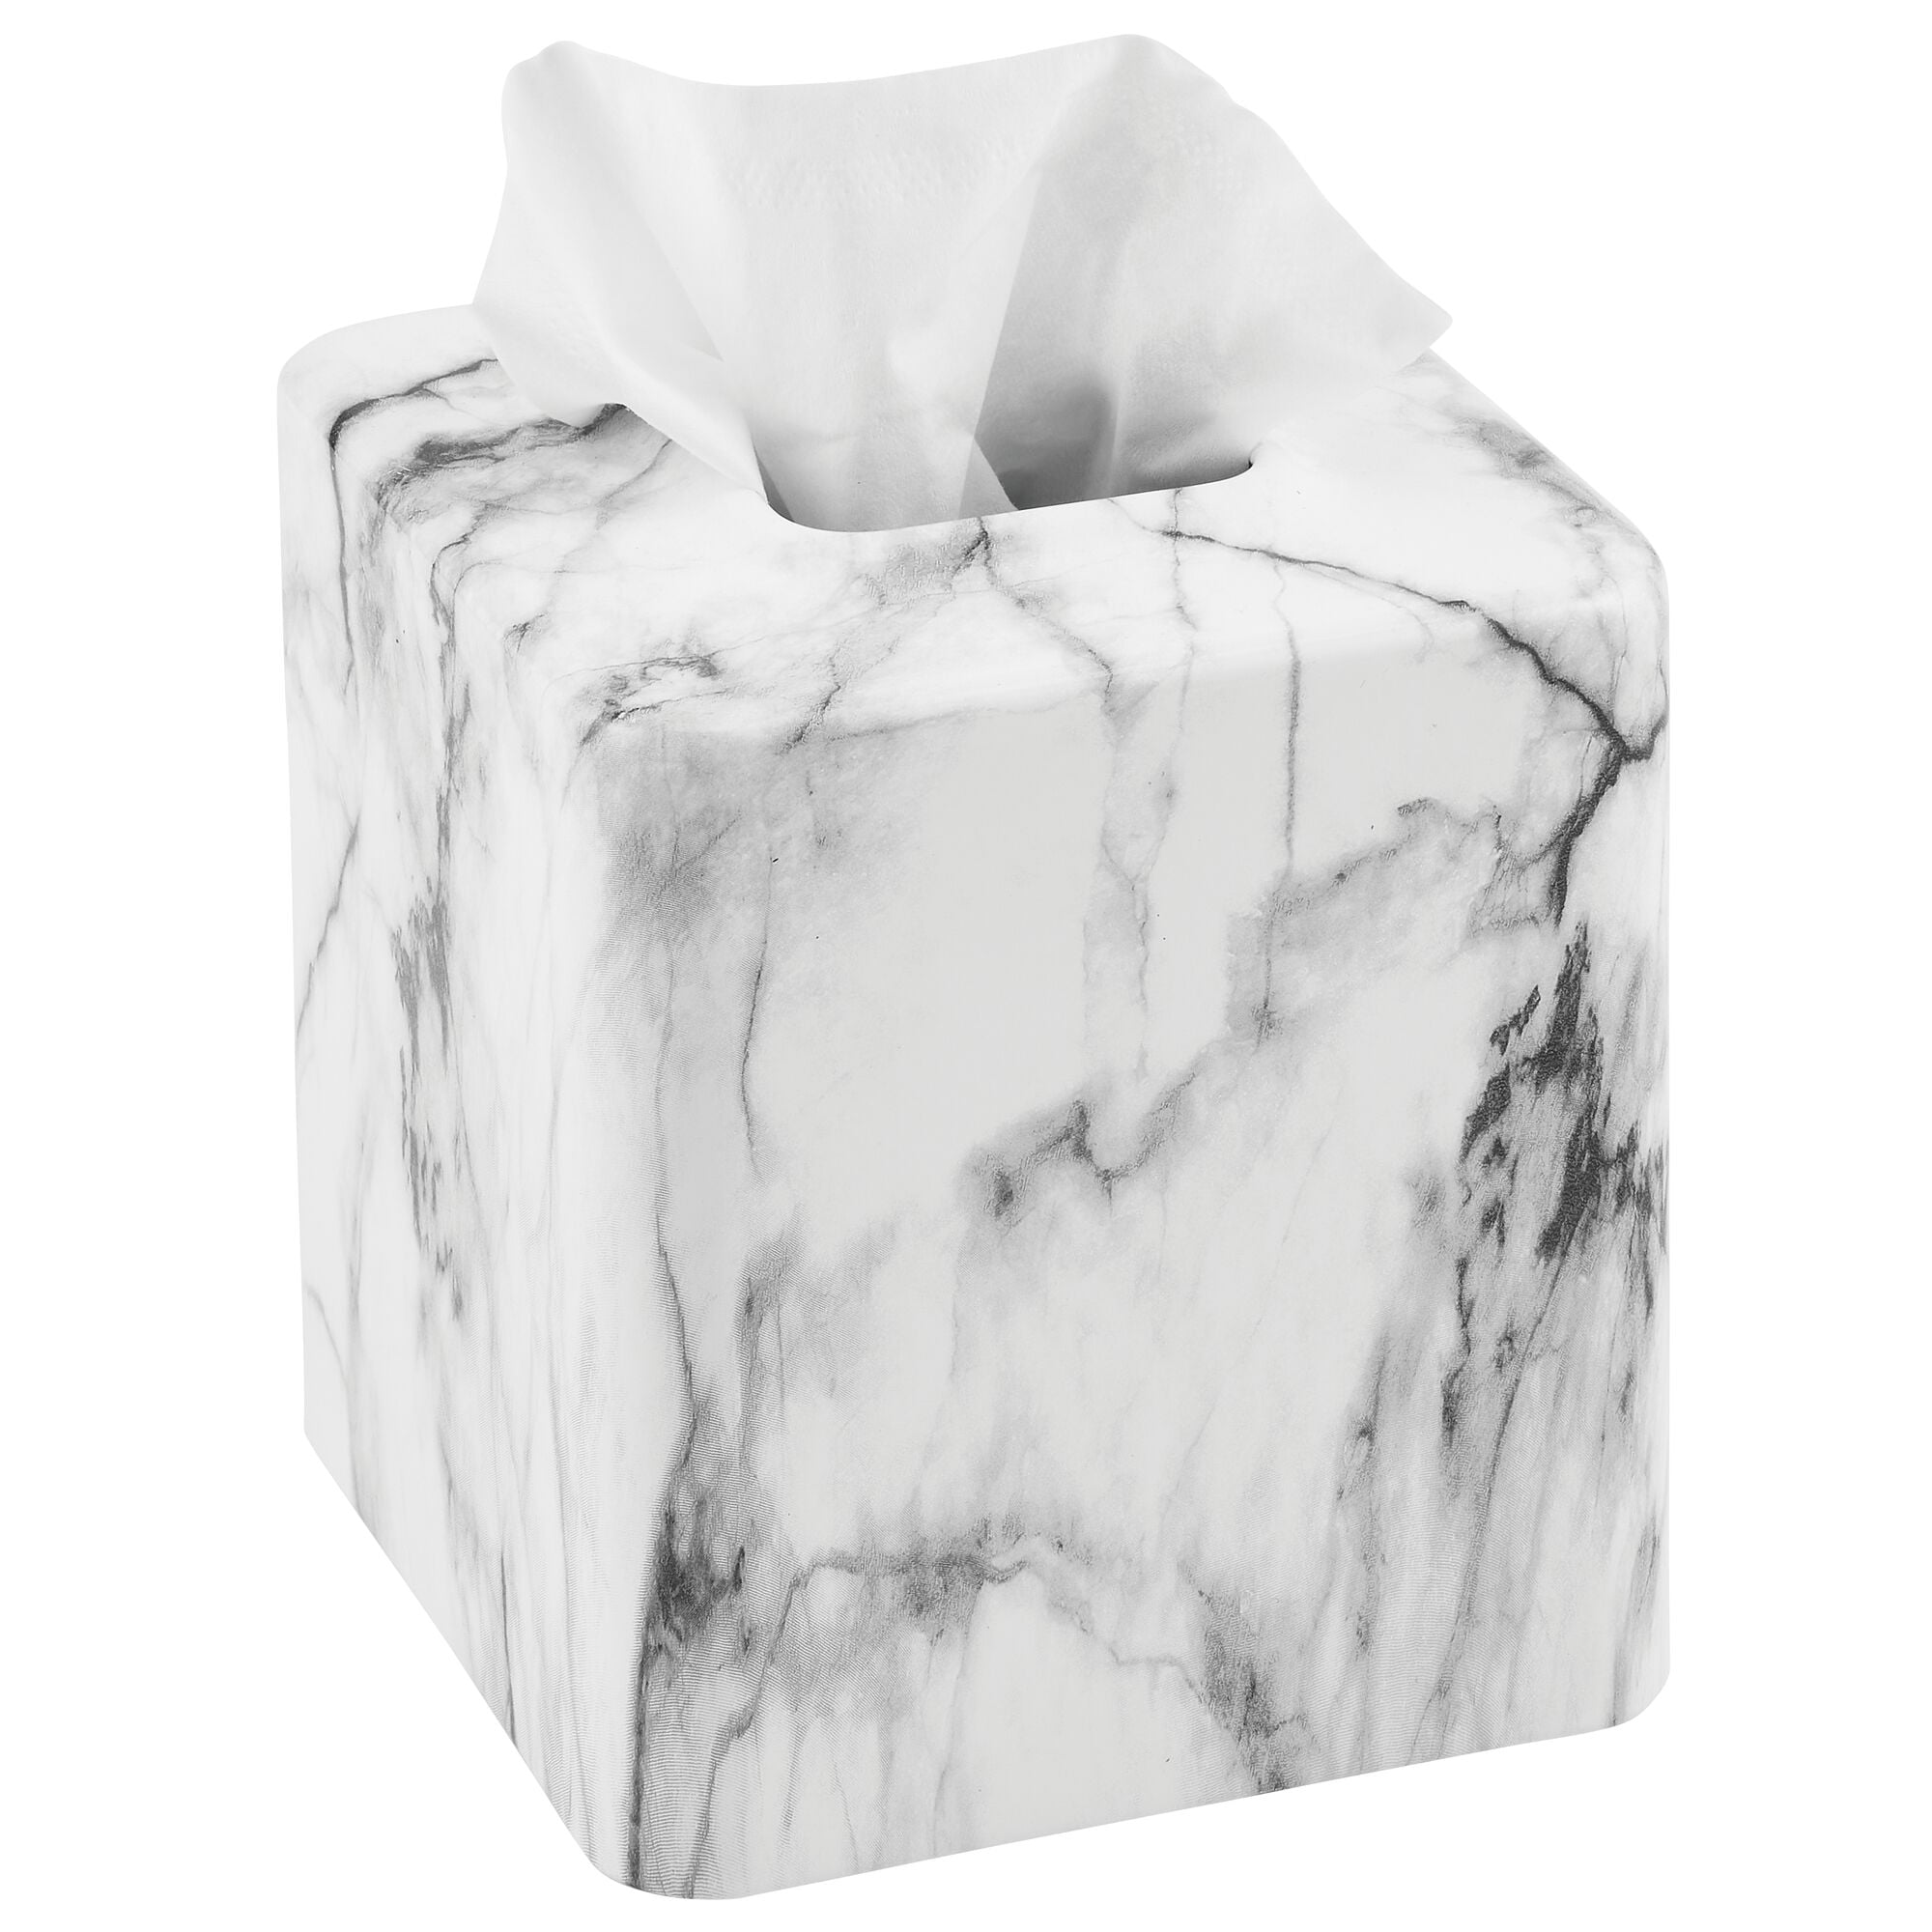 Square Paper Facial Tissue Box Holder Case for Bathroom Vanity Countertops 